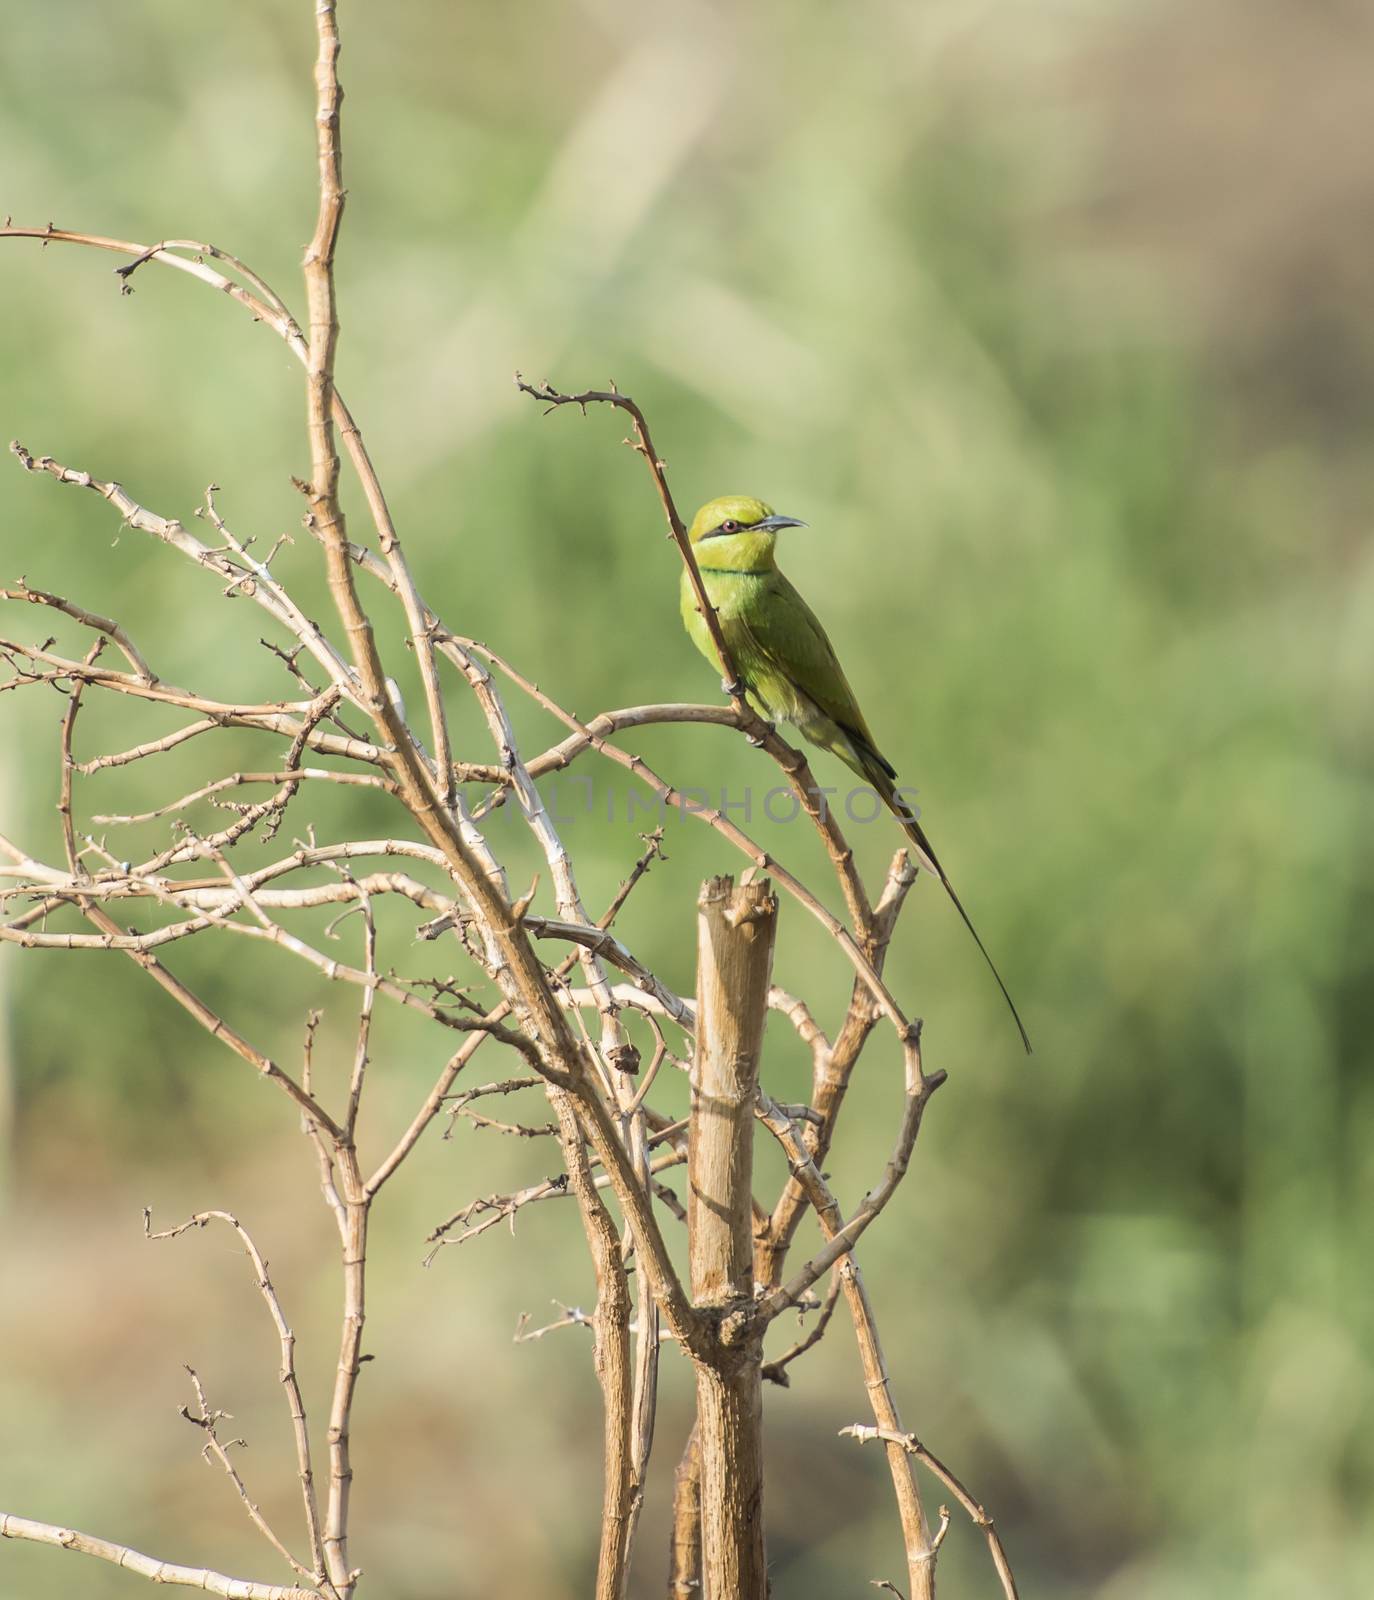 Wild Little Green Bee-eater bird merops orientalis perched on a branch in bush